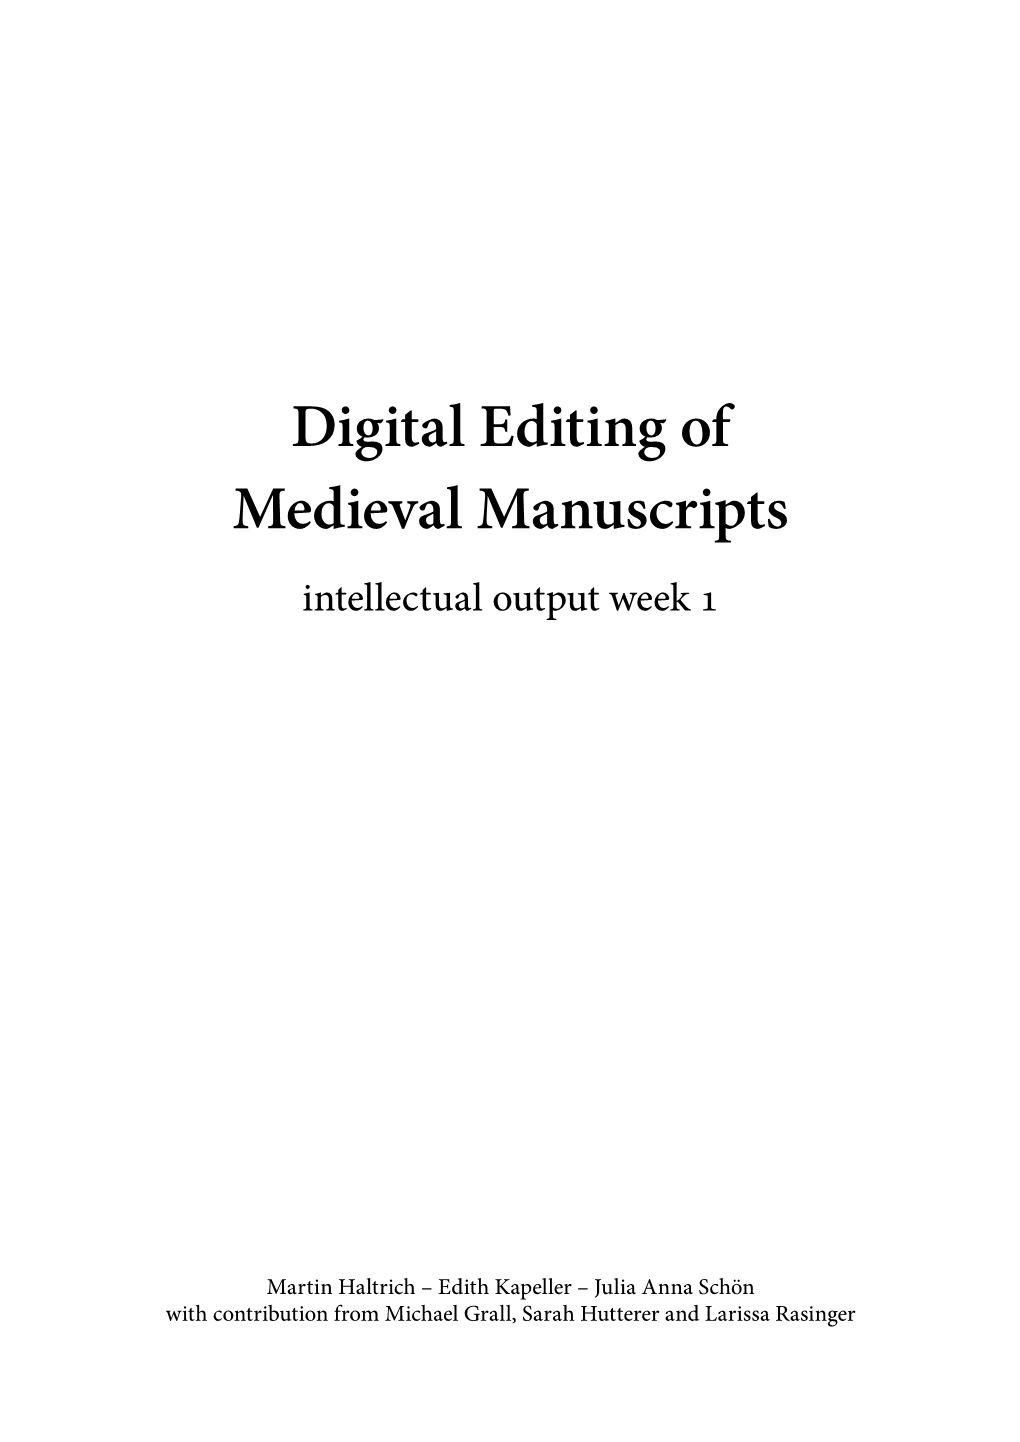 Digital Editing of Medieval Manuscripts Intellectual Output Week 1